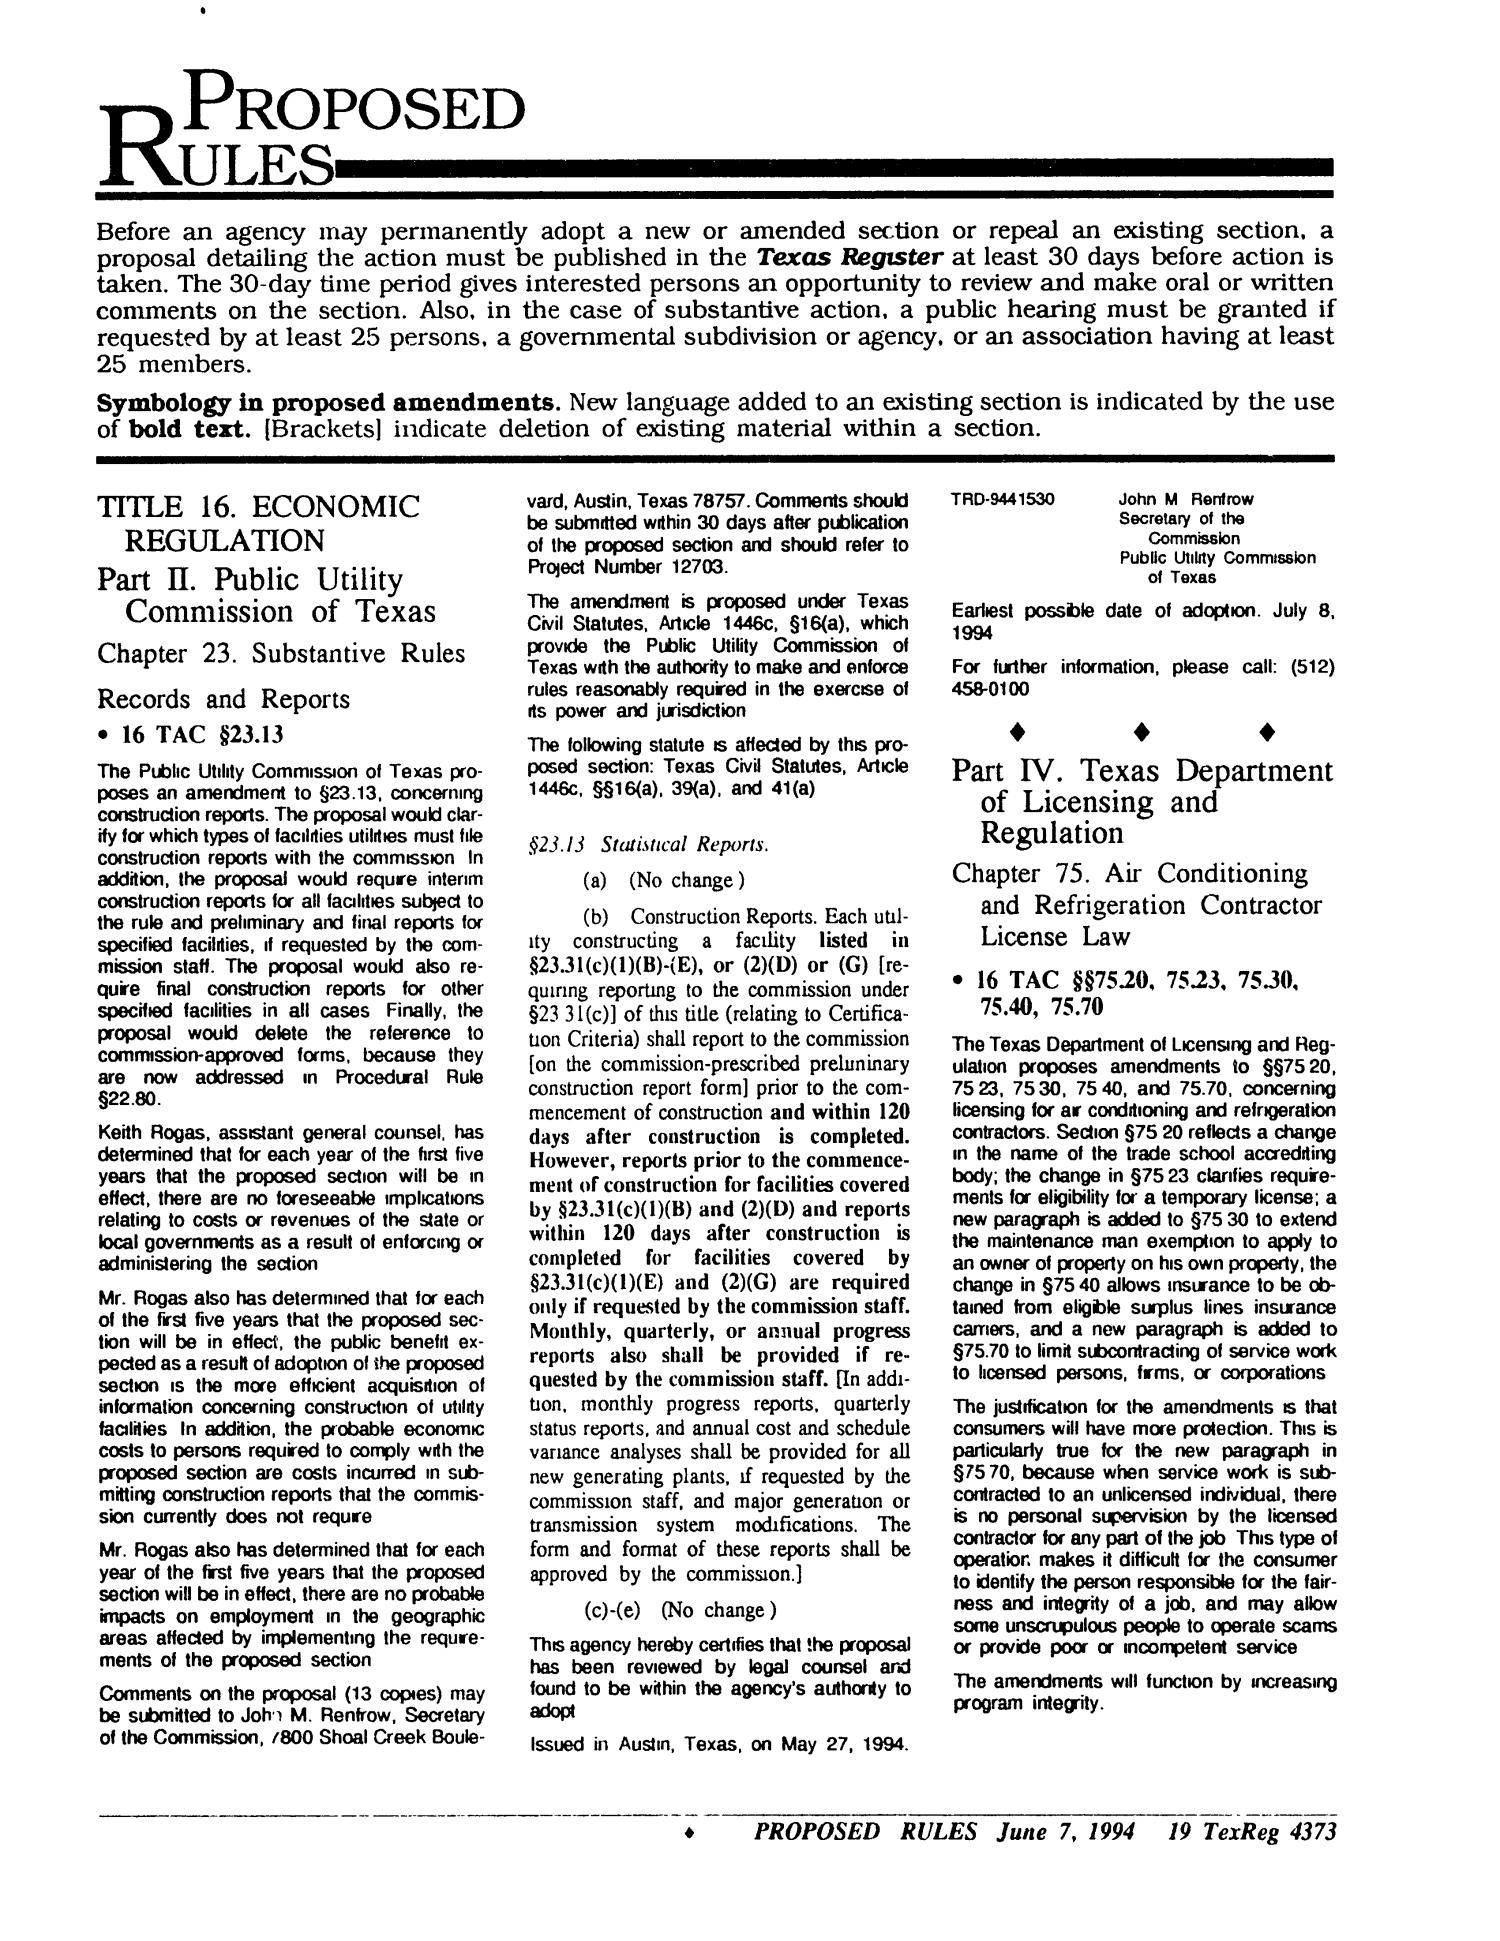 Texas Register, Volume 19, Number 42, Pages 4363-4461, June 7, 1994
                                                
                                                    4373
                                                